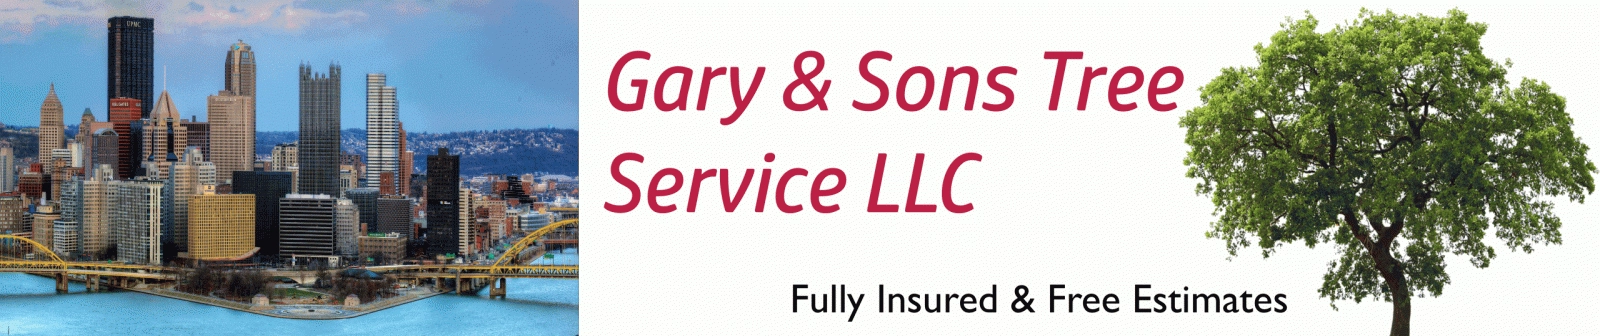 Gary & Sons Tree Service LLC Logo